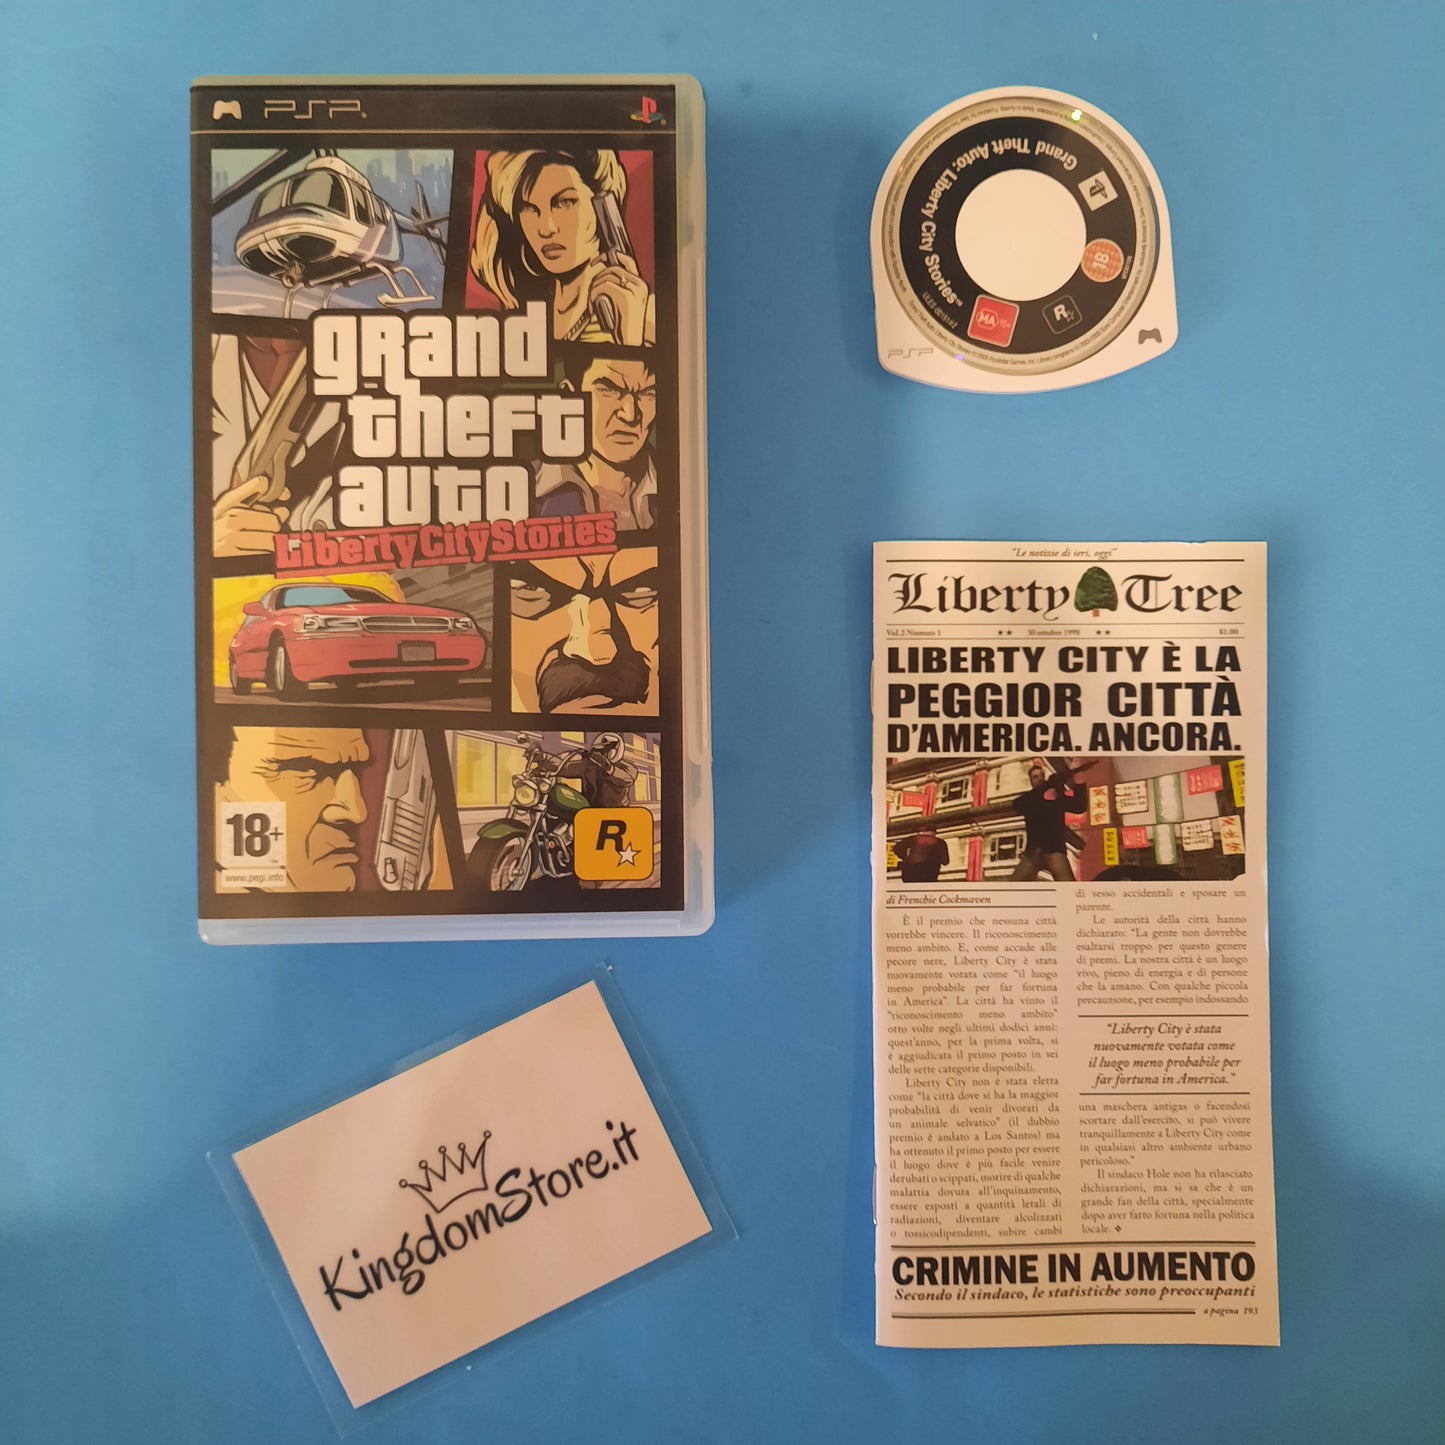 GTA Grand Theft Auto Liberty City Stories - Playstation Portable PSP